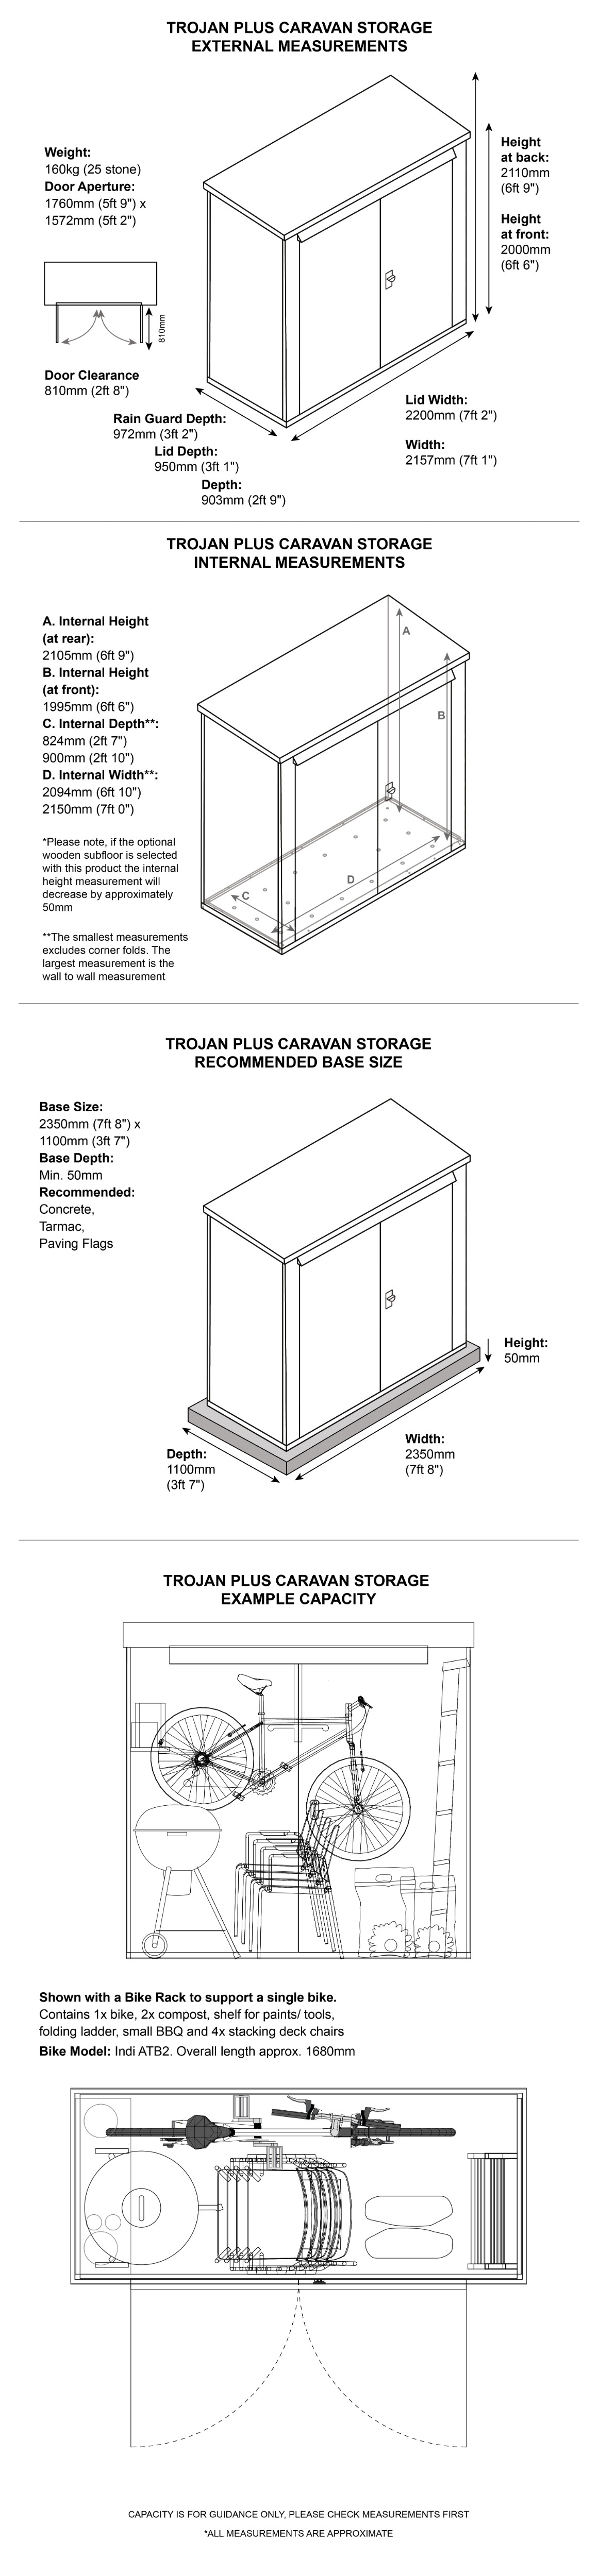 7x3 Metal Caravan Storage (Trojan Plus) - 5 Point Locking